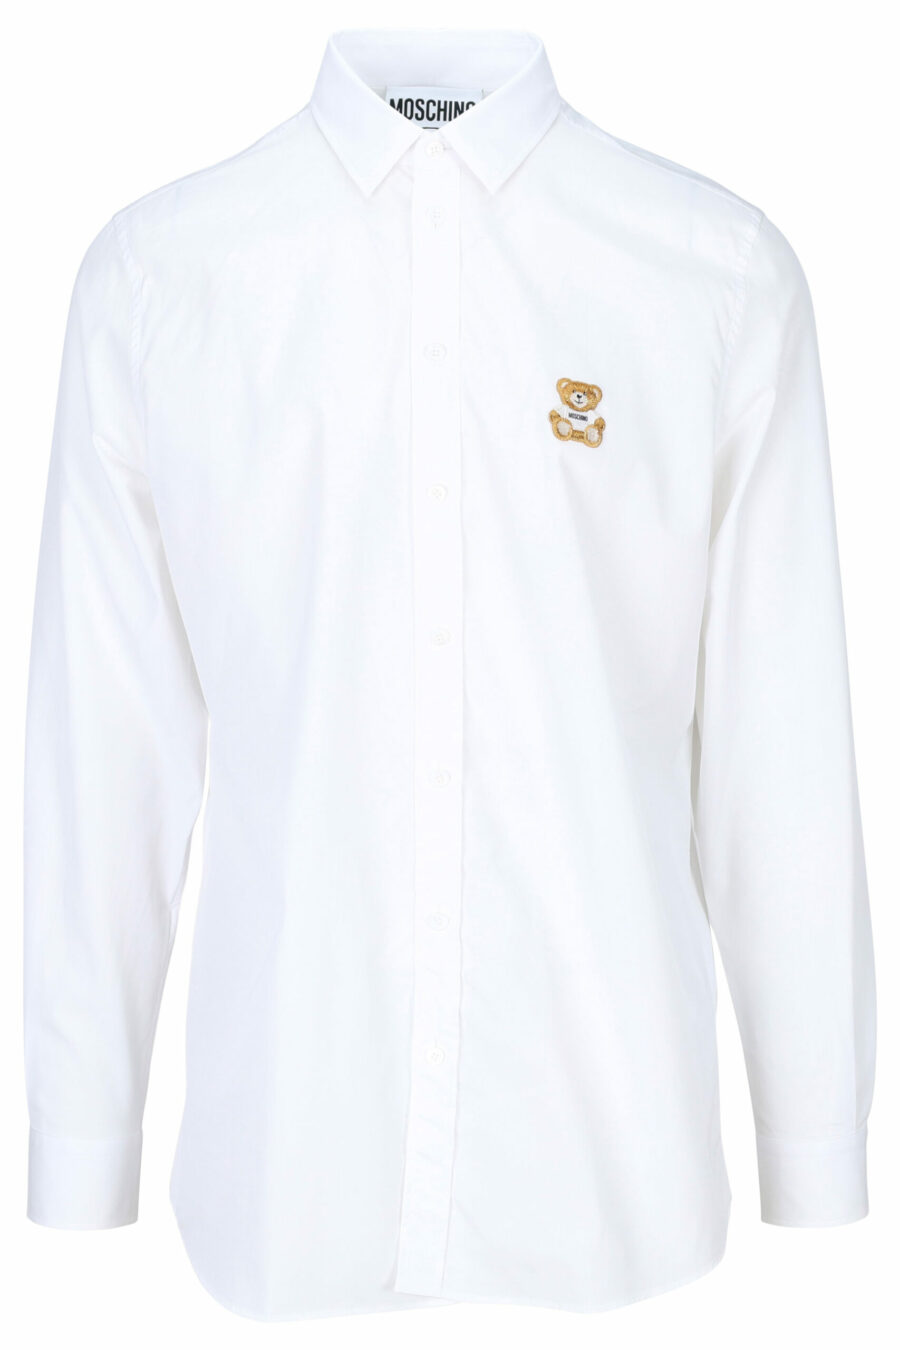 Chemise blanche avec mini-logo brodé - 889316631326